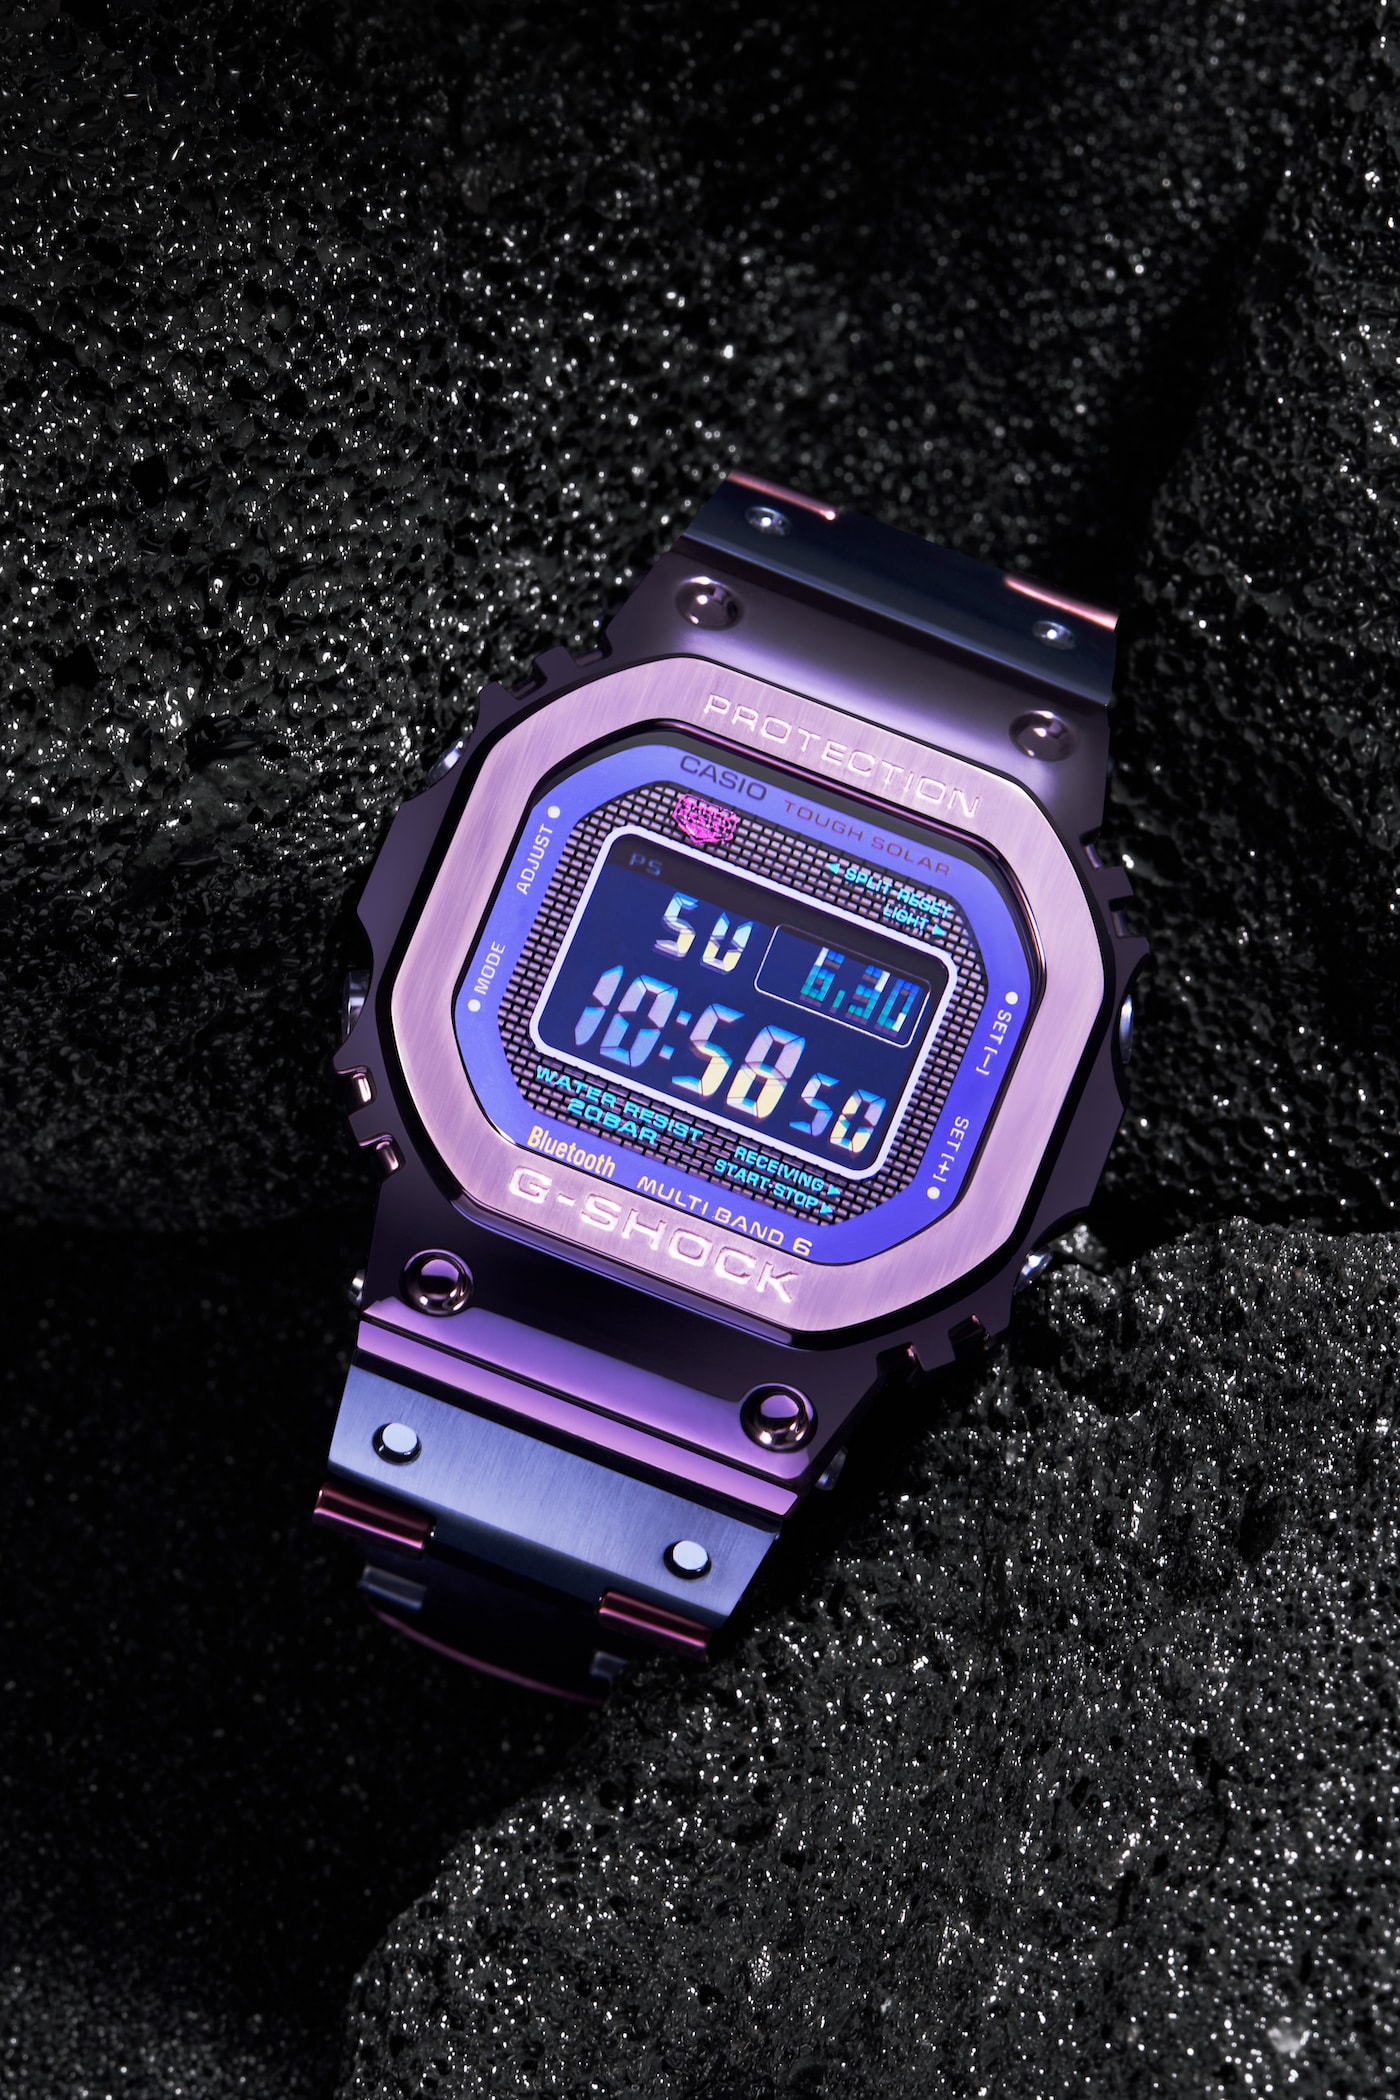 G-SHOCK 发布全新 GMW-B5000「东京暮色」腕表